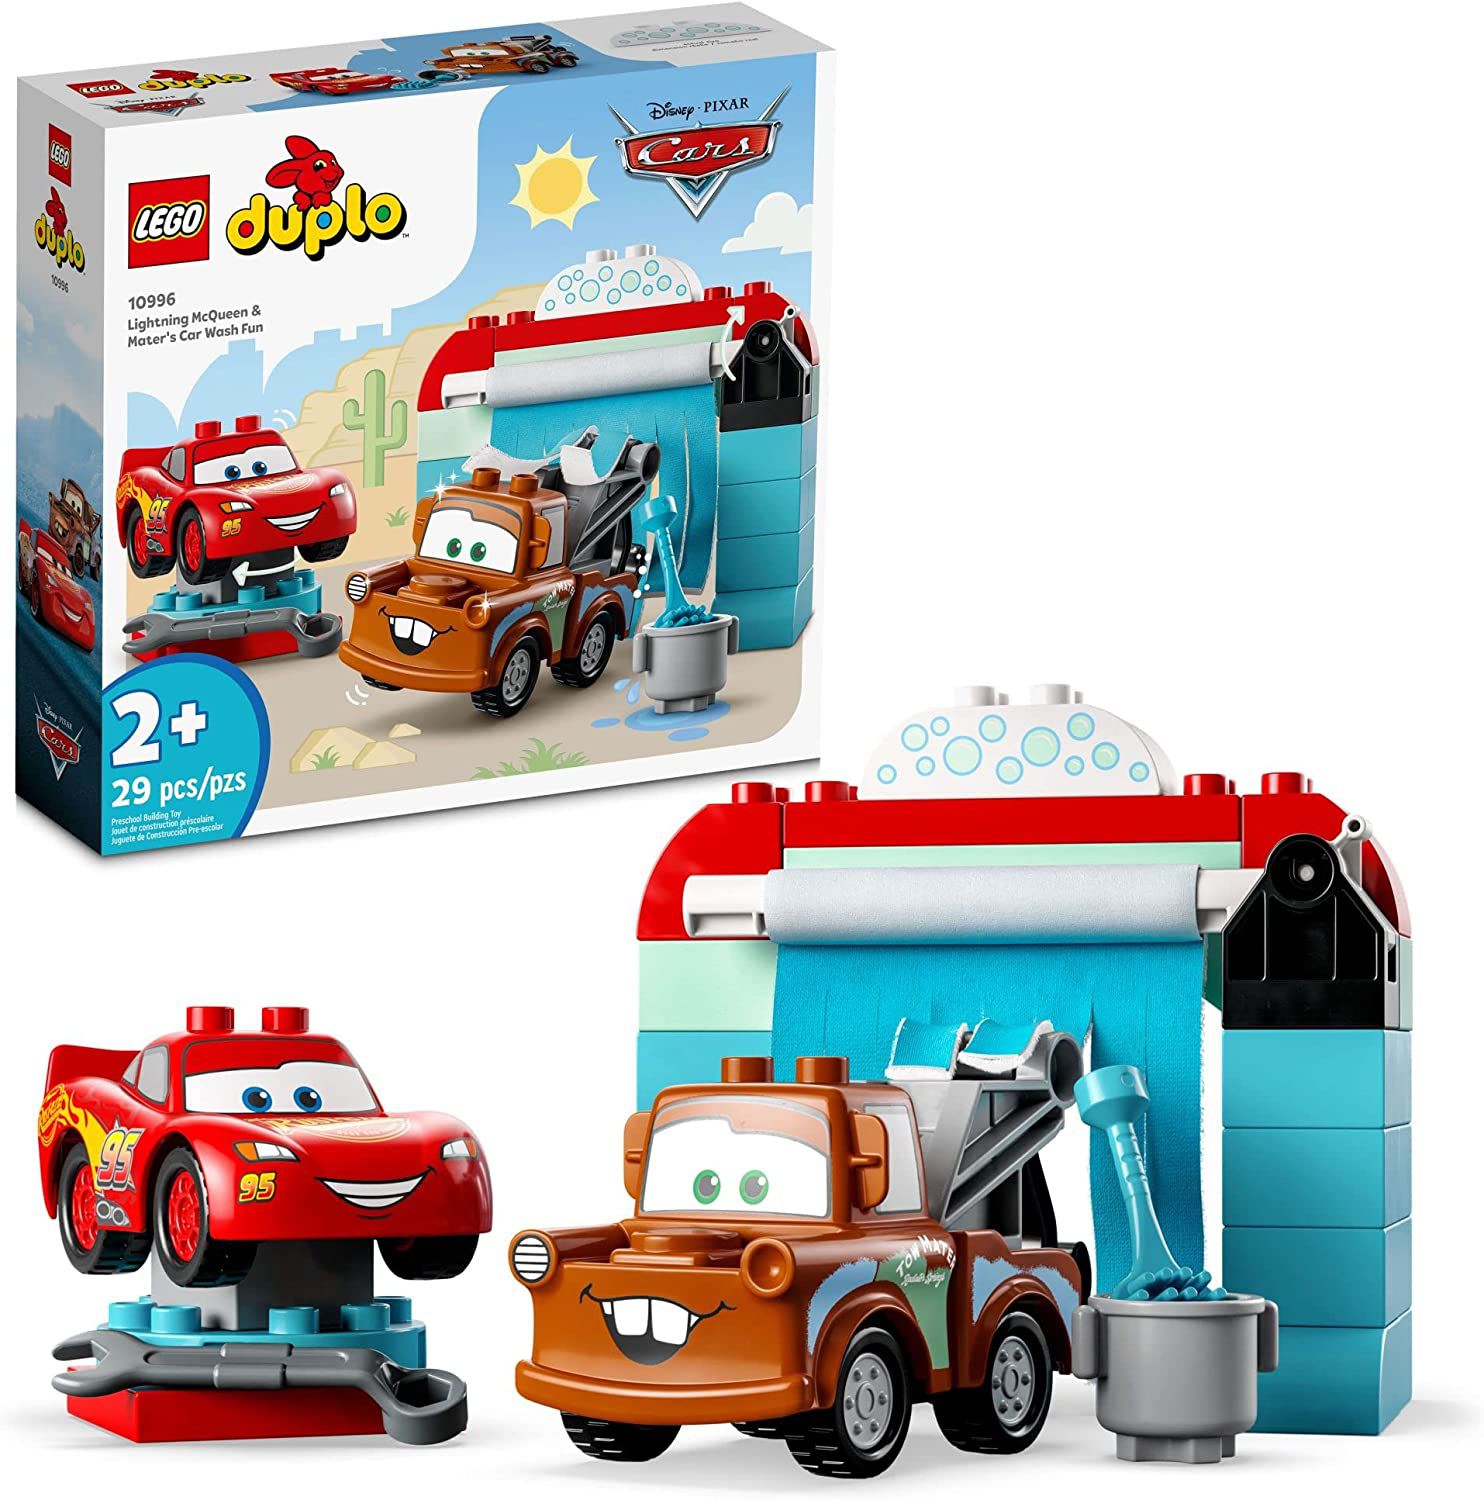 Barraca Infantil Portátil Casa Disney Pixar Carros Relâmpago MCQueen- ZIPPY  TOYS